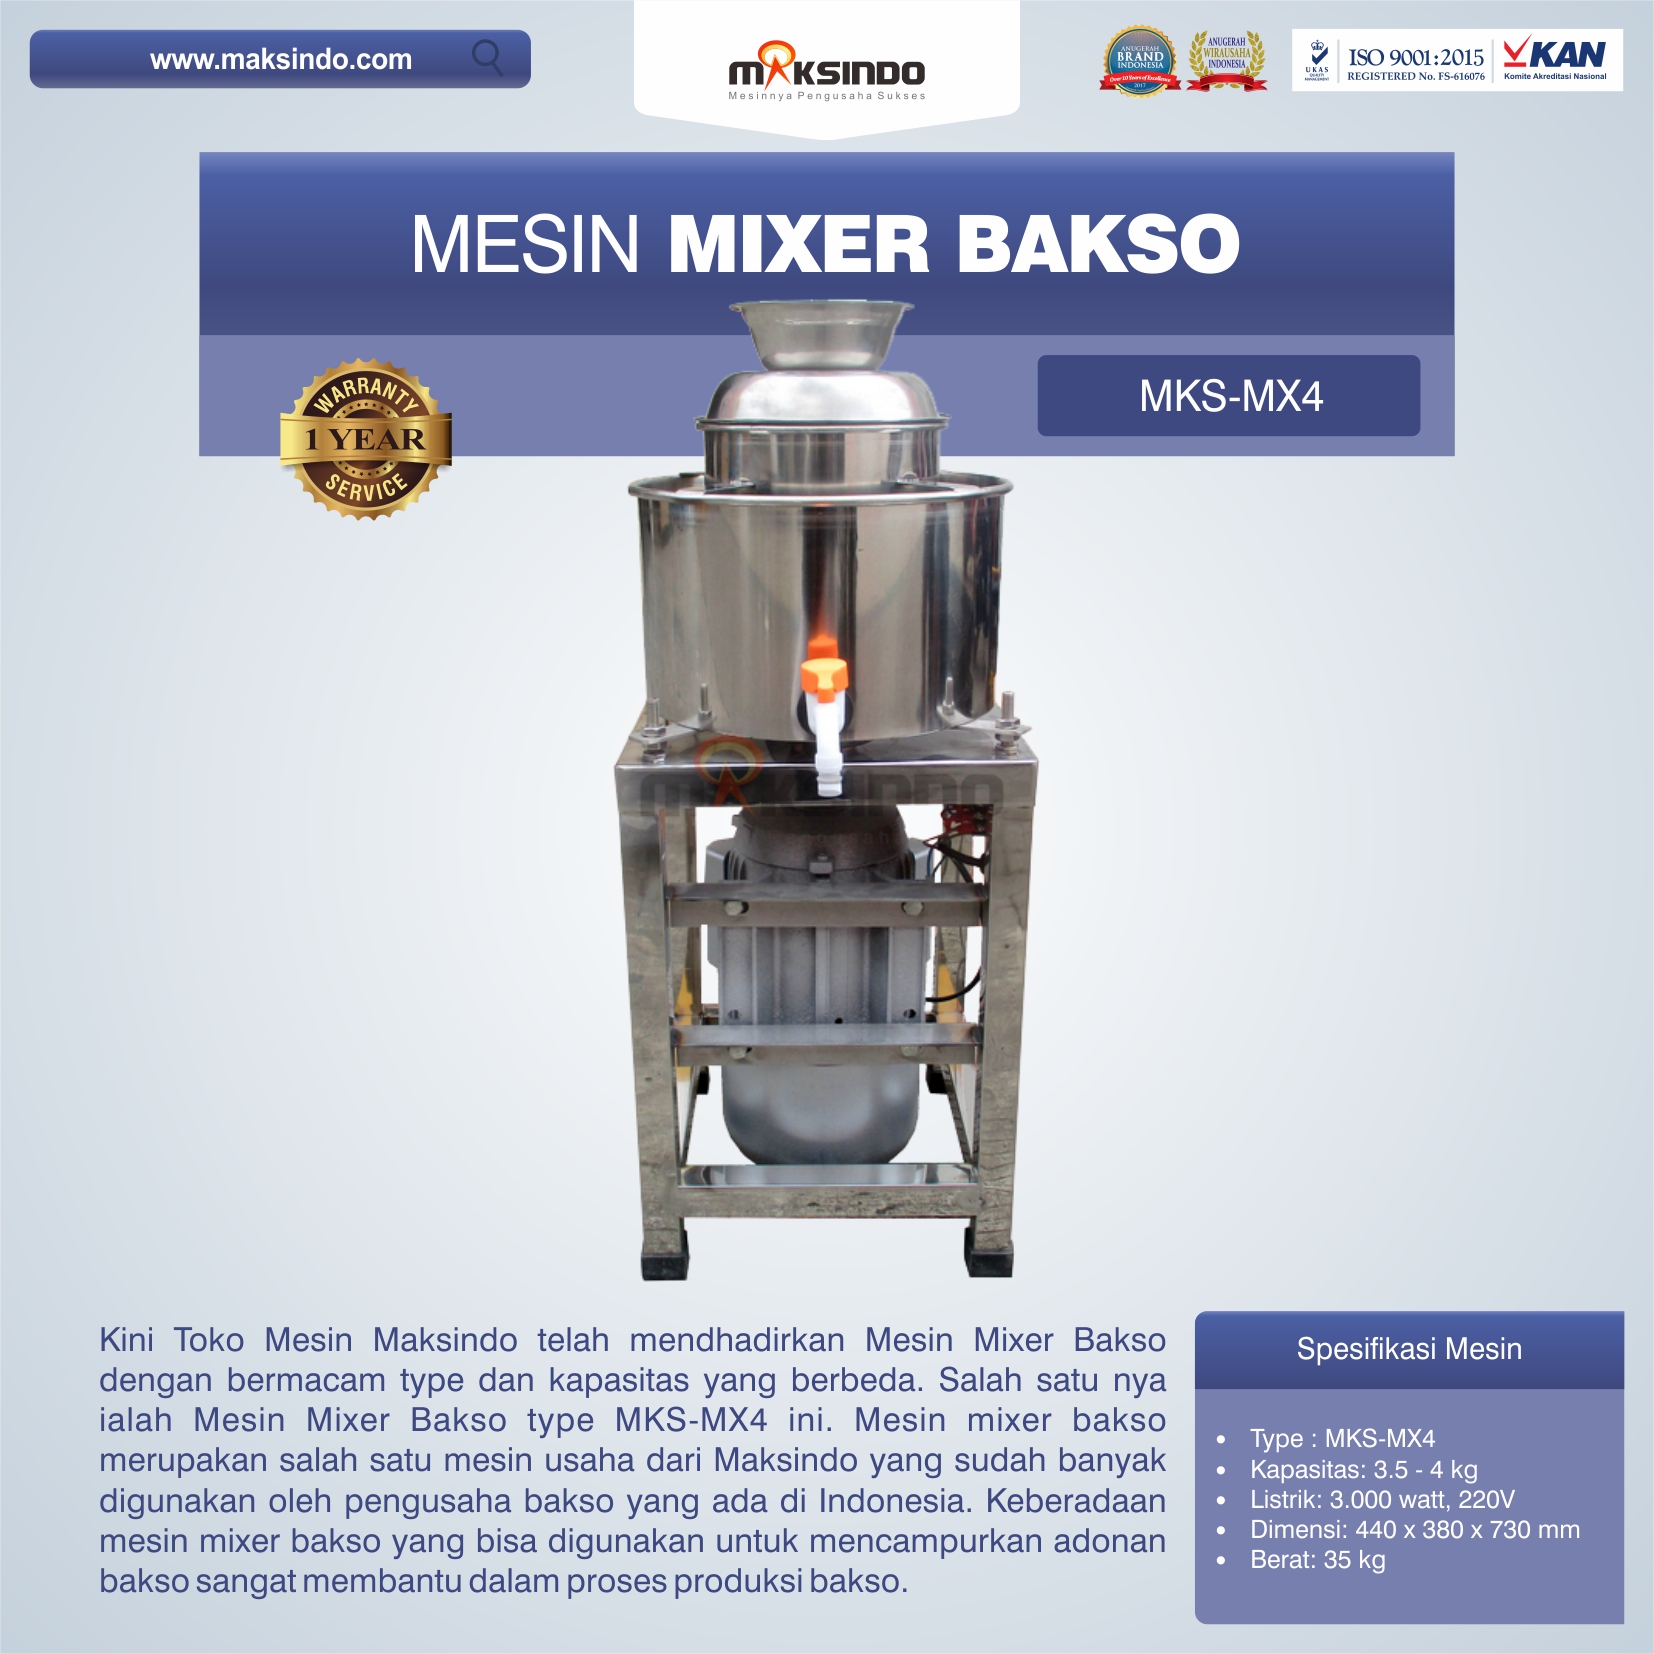 Jual Mesin Mixer Bakso MKS-MX4 di Jakarta